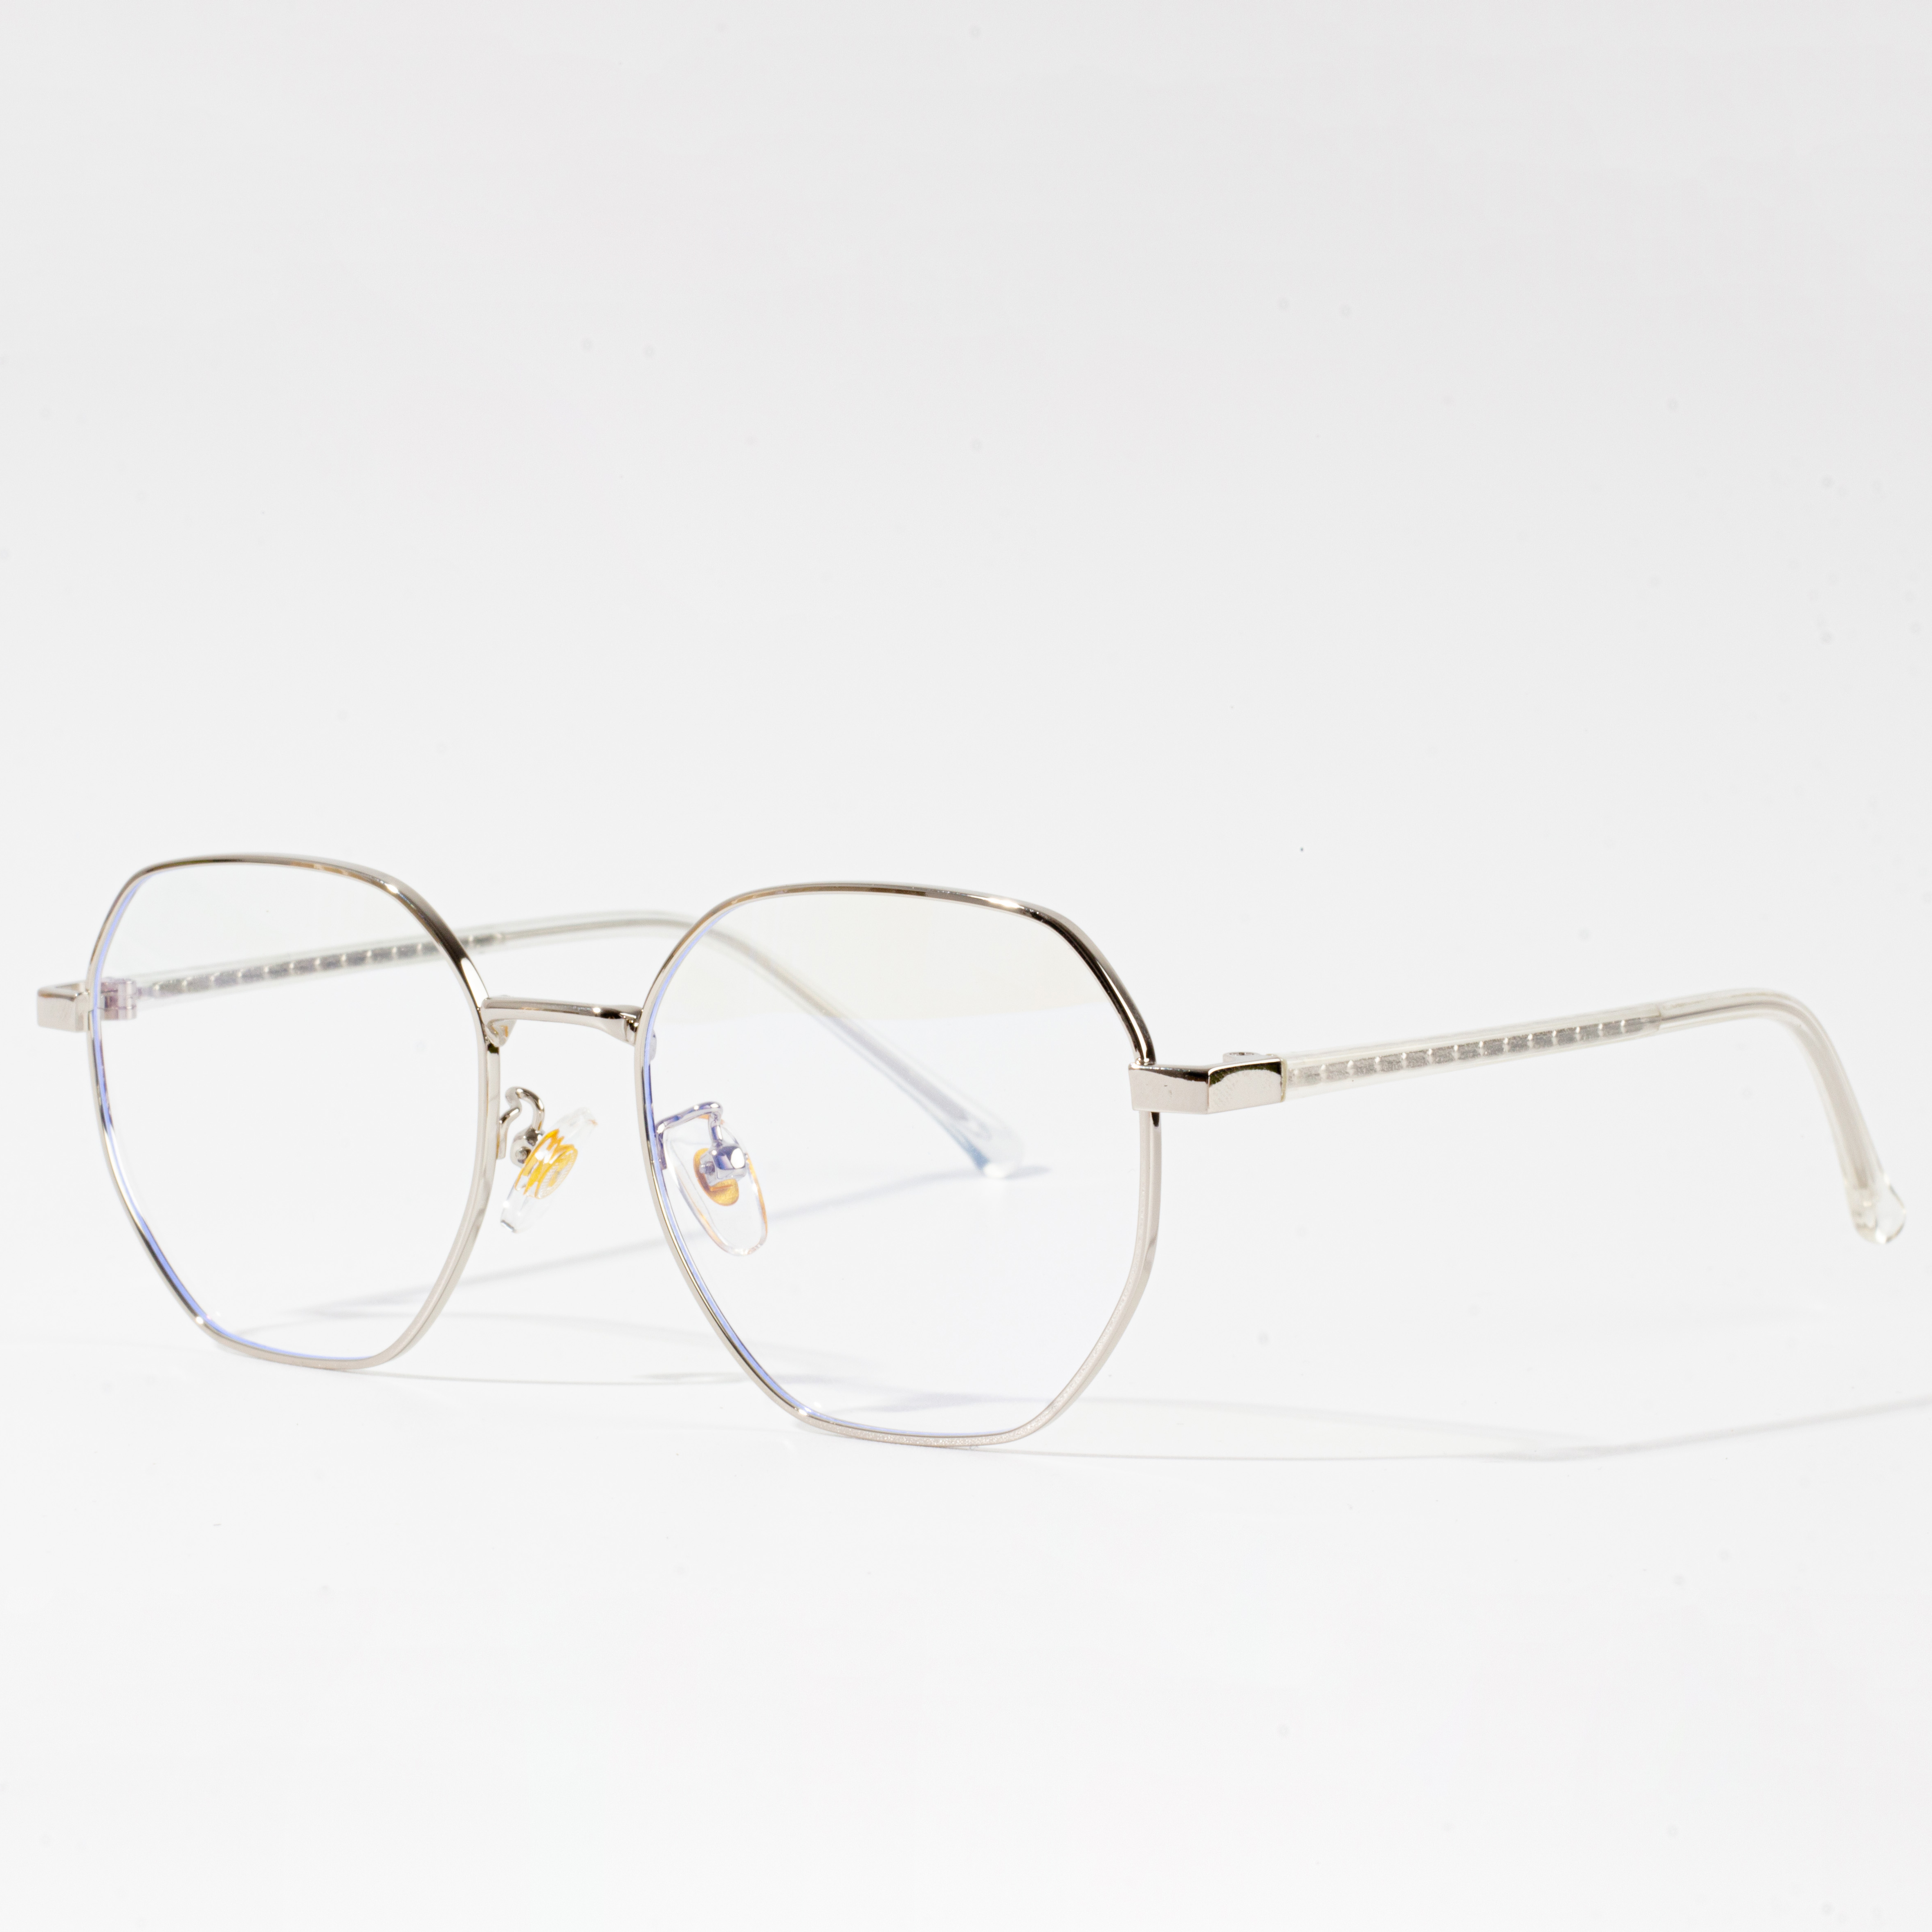 eyeglass frames expensive